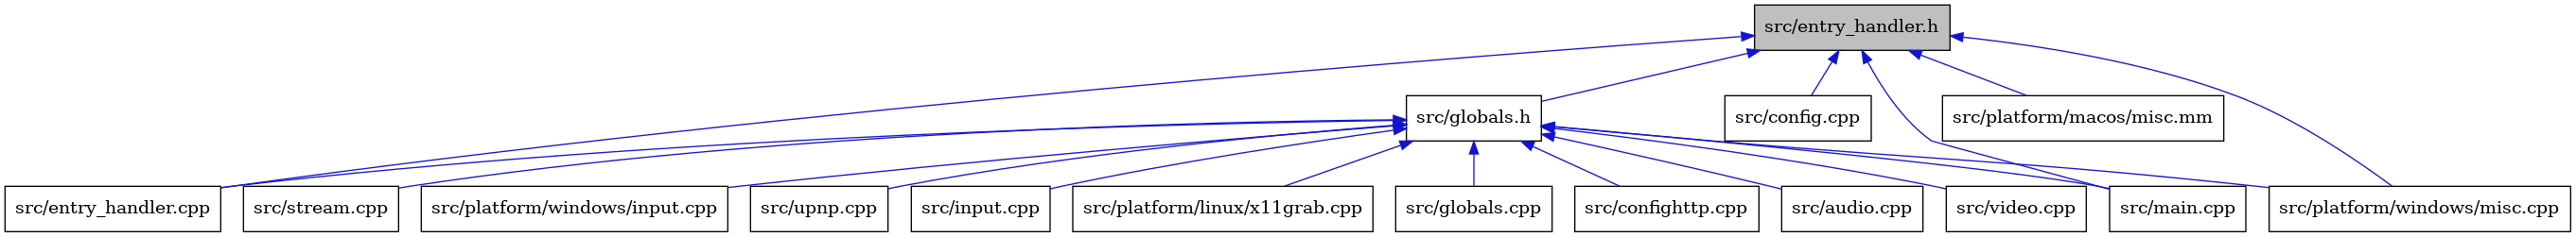 digraph {
    graph [bgcolor="#00000000"]
    node [shape=rectangle style=filled fillcolor="#FFFFFF" font=Helvetica padding=2]
    edge [color="#1414CE"]
    "4" [label="src/globals.h" tooltip="src/globals.h"]
    "13" [label="src/stream.cpp" tooltip="src/stream.cpp"]
    "3" [label="src/entry_handler.cpp" tooltip="src/entry_handler.cpp"]
    "11" [label="src/platform/windows/input.cpp" tooltip="src/platform/windows/input.cpp"]
    "14" [label="src/upnp.cpp" tooltip="src/upnp.cpp"]
    "8" [label="src/input.cpp" tooltip="src/input.cpp"]
    "10" [label="src/platform/linux/x11grab.cpp" tooltip="src/platform/linux/x11grab.cpp"]
    "2" [label="src/config.cpp" tooltip="src/config.cpp"]
    "7" [label="src/globals.cpp" tooltip="src/globals.cpp"]
    "9" [label="src/main.cpp" tooltip="src/main.cpp"]
    "1" [label="src/entry_handler.h" tooltip="src/entry_handler.h" fillcolor="#BFBFBF"]
    "16" [label="src/platform/macos/misc.mm" tooltip="src/platform/macos/misc.mm"]
    "12" [label="src/platform/windows/misc.cpp" tooltip="src/platform/windows/misc.cpp"]
    "6" [label="src/confighttp.cpp" tooltip="src/confighttp.cpp"]
    "5" [label="src/audio.cpp" tooltip="src/audio.cpp"]
    "15" [label="src/video.cpp" tooltip="src/video.cpp"]
    "4" -> "5" [dir=back tooltip="include"]
    "4" -> "6" [dir=back tooltip="include"]
    "4" -> "3" [dir=back tooltip="include"]
    "4" -> "7" [dir=back tooltip="include"]
    "4" -> "8" [dir=back tooltip="include"]
    "4" -> "9" [dir=back tooltip="include"]
    "4" -> "10" [dir=back tooltip="include"]
    "4" -> "11" [dir=back tooltip="include"]
    "4" -> "12" [dir=back tooltip="include"]
    "4" -> "13" [dir=back tooltip="include"]
    "4" -> "14" [dir=back tooltip="include"]
    "4" -> "15" [dir=back tooltip="include"]
    "1" -> "2" [dir=back tooltip="include"]
    "1" -> "3" [dir=back tooltip="include"]
    "1" -> "4" [dir=back tooltip="include"]
    "1" -> "9" [dir=back tooltip="include"]
    "1" -> "16" [dir=back tooltip="include"]
    "1" -> "12" [dir=back tooltip="include"]
}